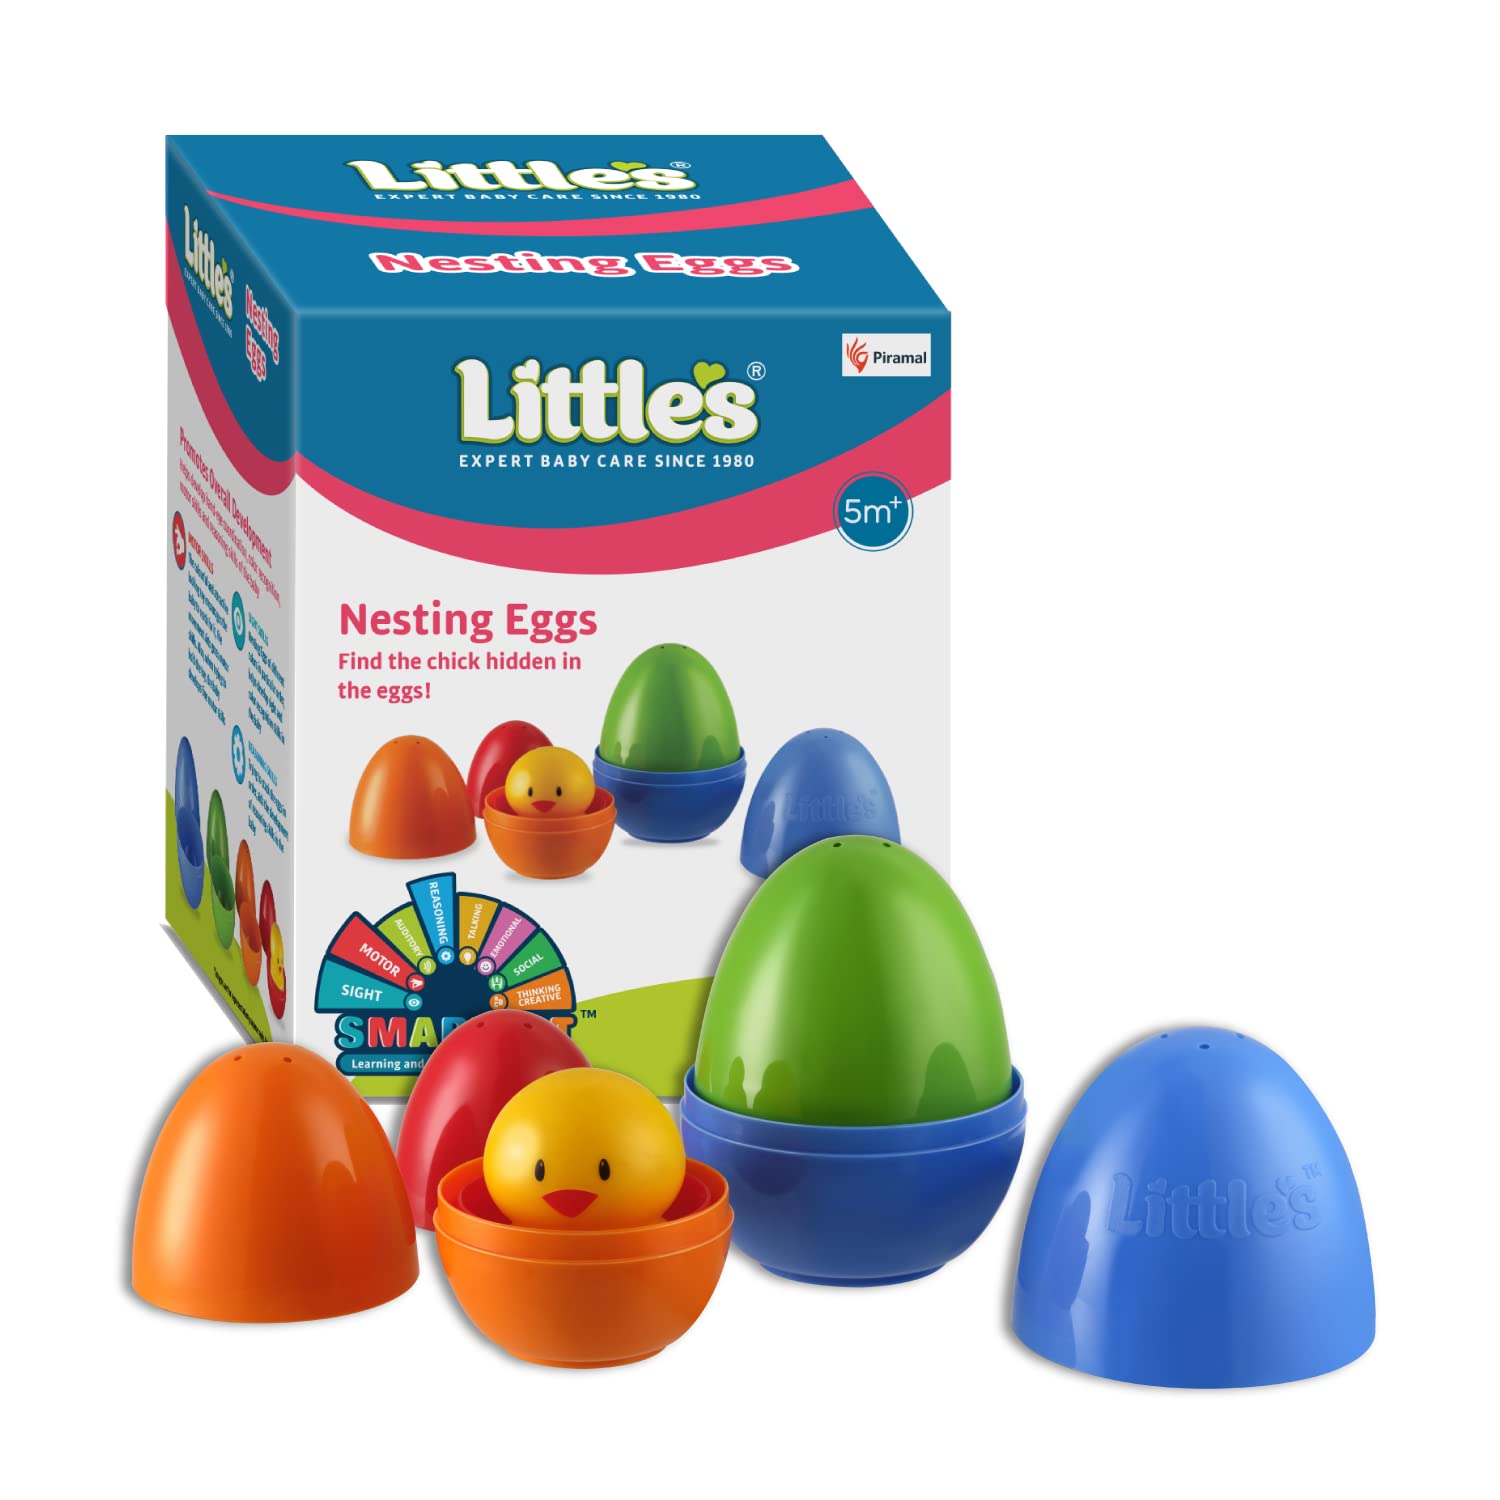 Little's Nesting Eggs Activity Toy